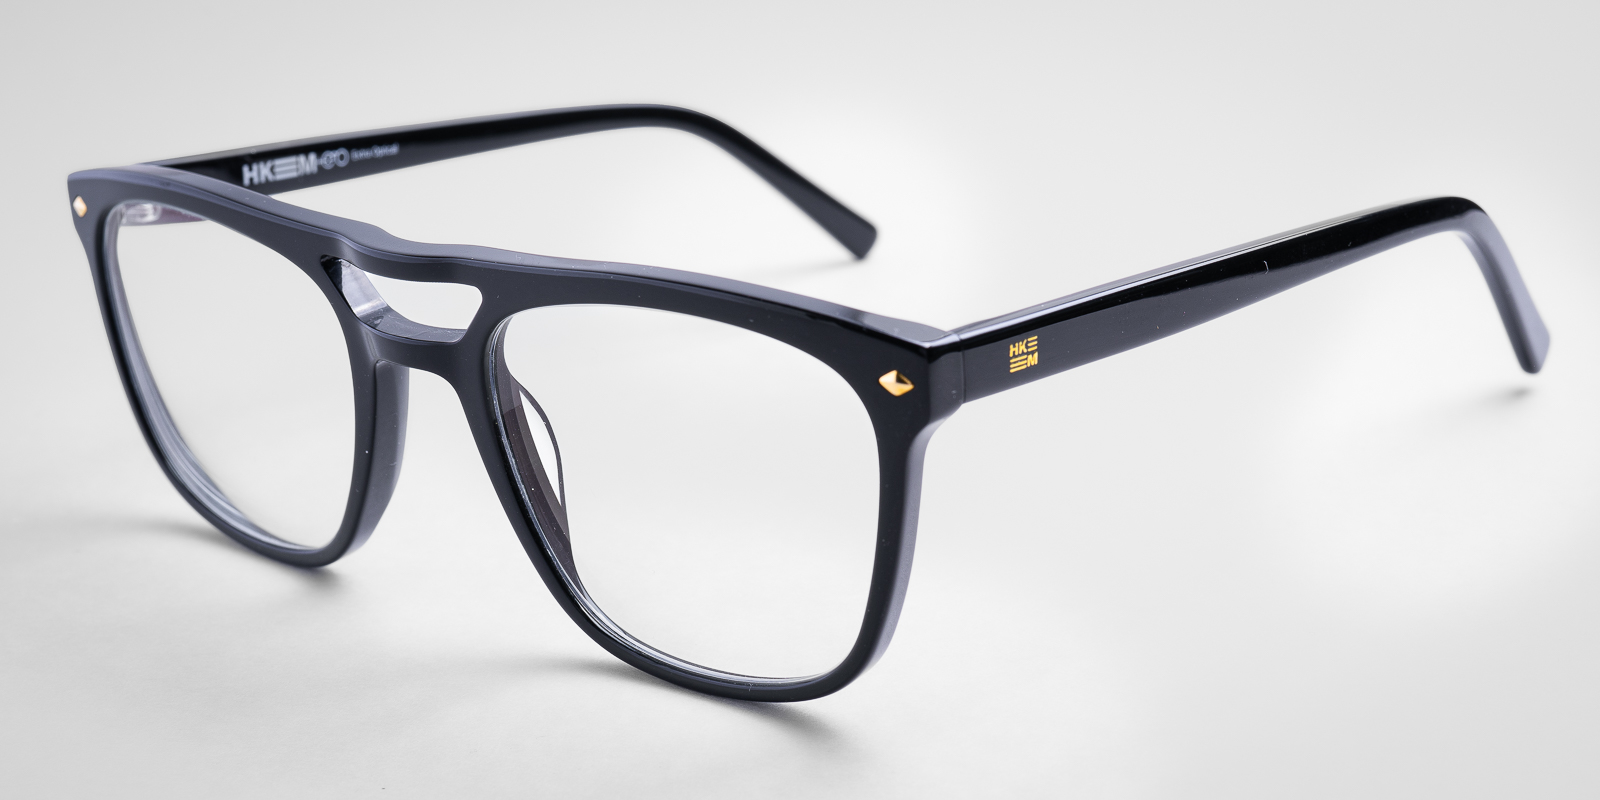 Hkeem briller - Para fra Hkeem - Svart - plast - wayfarer - Medium